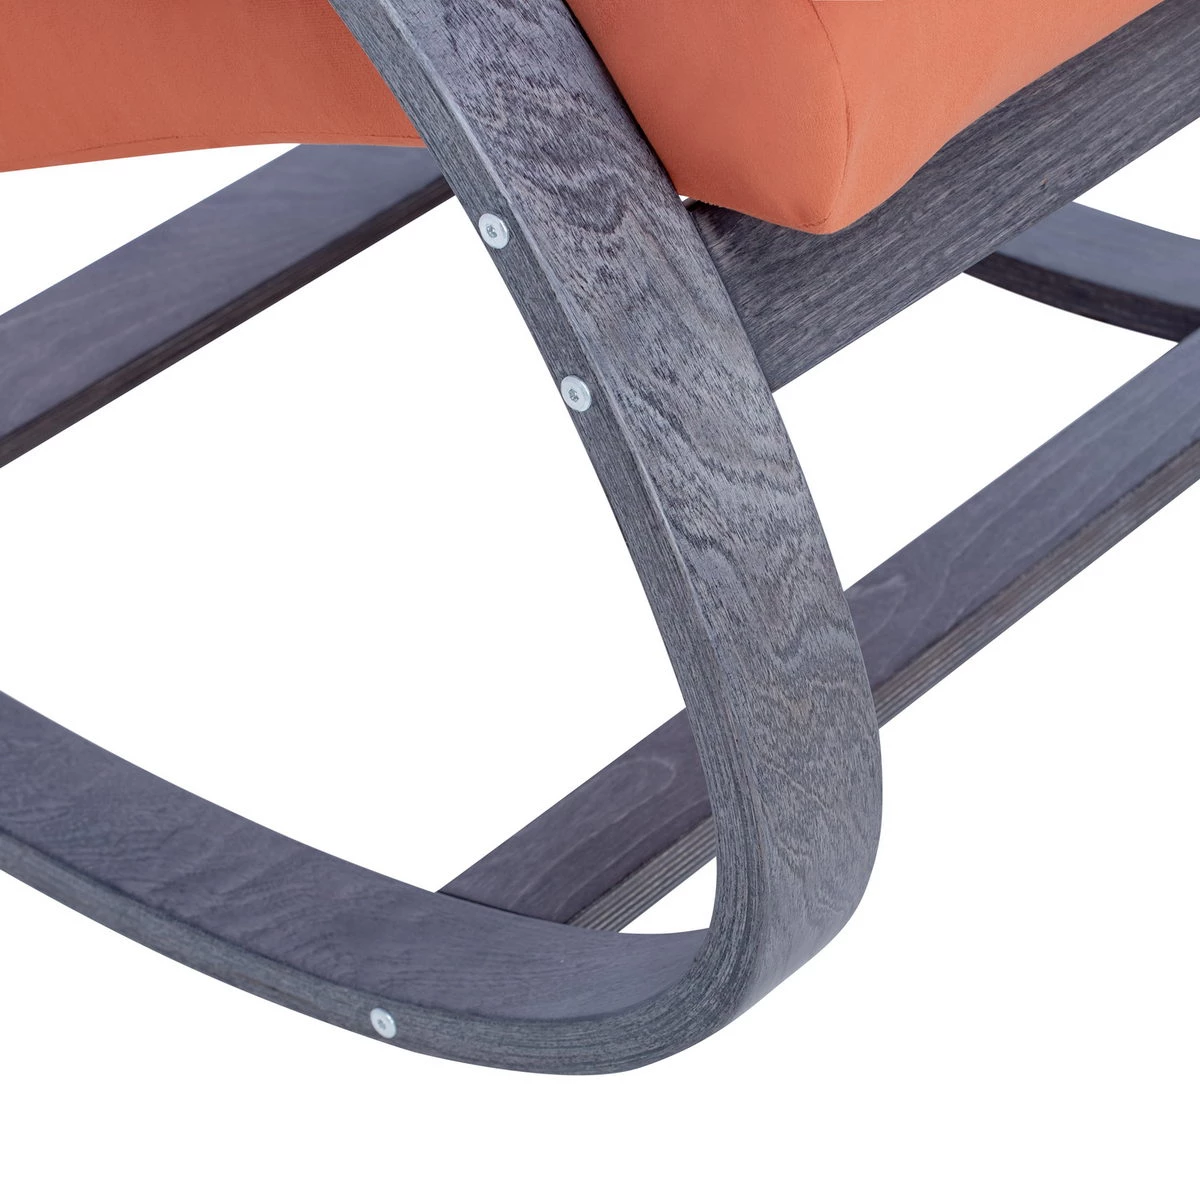 Кресло-качалка Leset Милано (Импэкс). Цвет каркаса: Венге текстура; Цвет обивки: V39 оранжевый